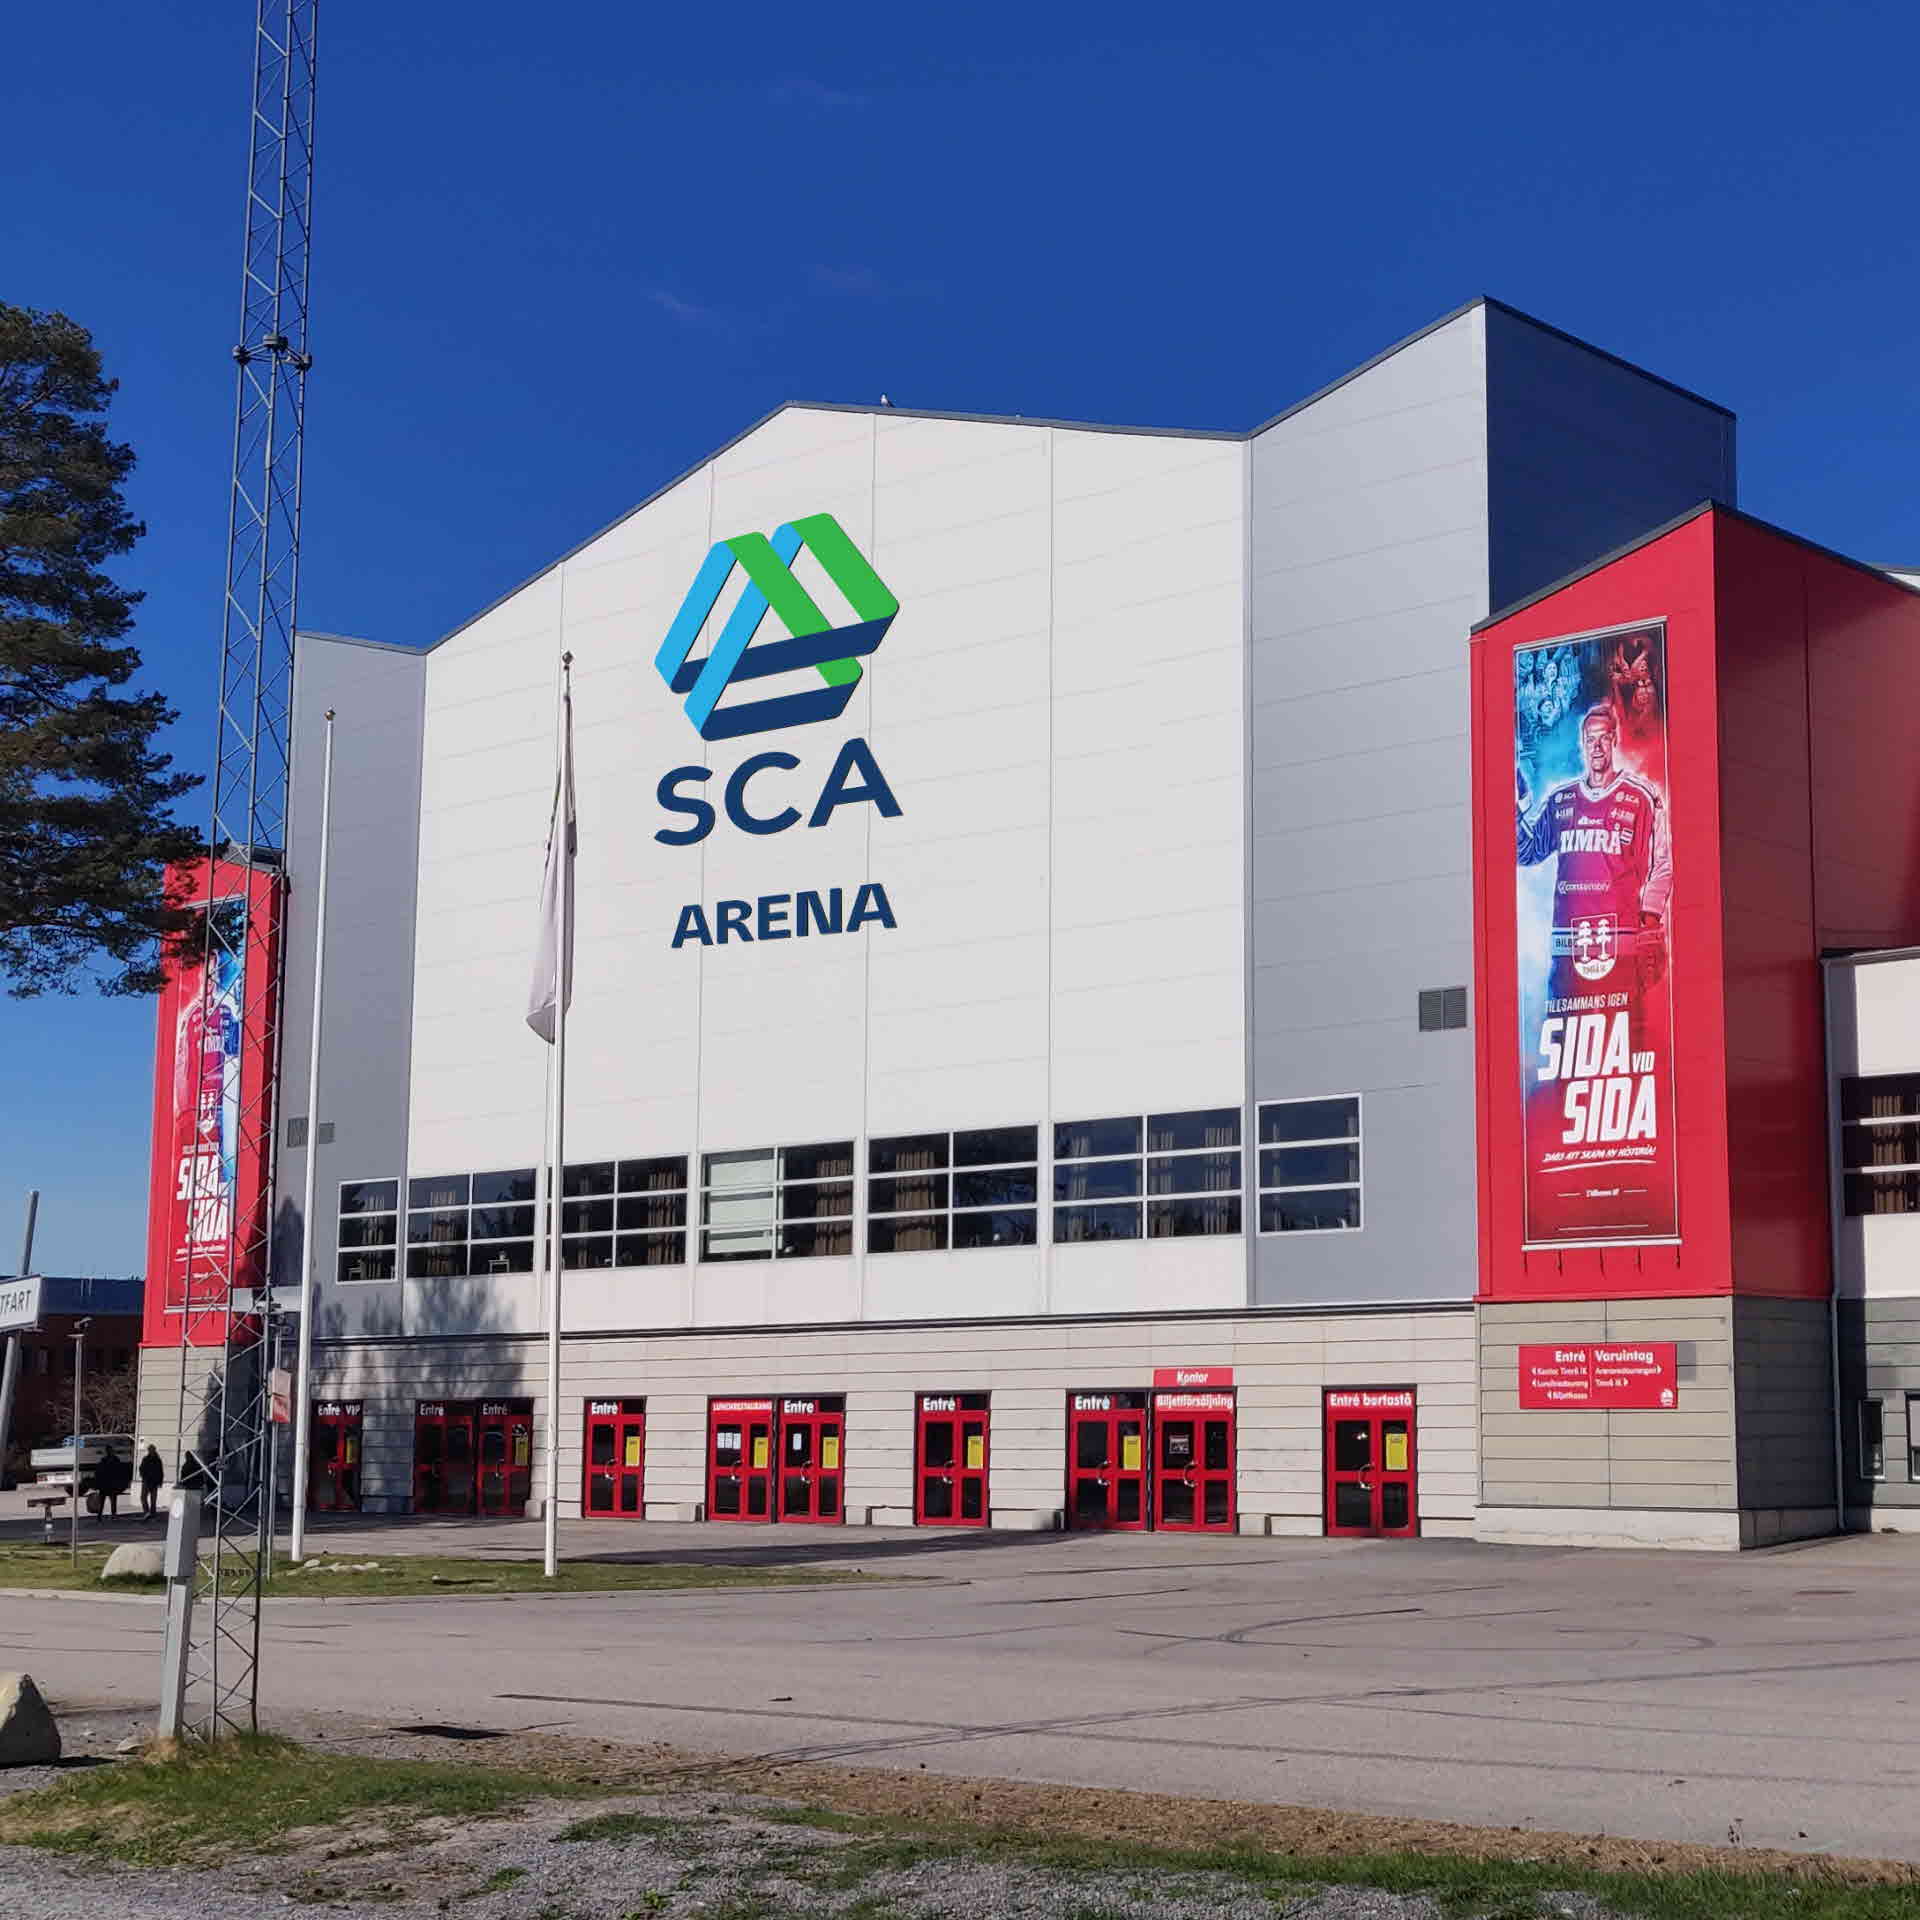 Fasadskylt på SCA-arena i Timrå.